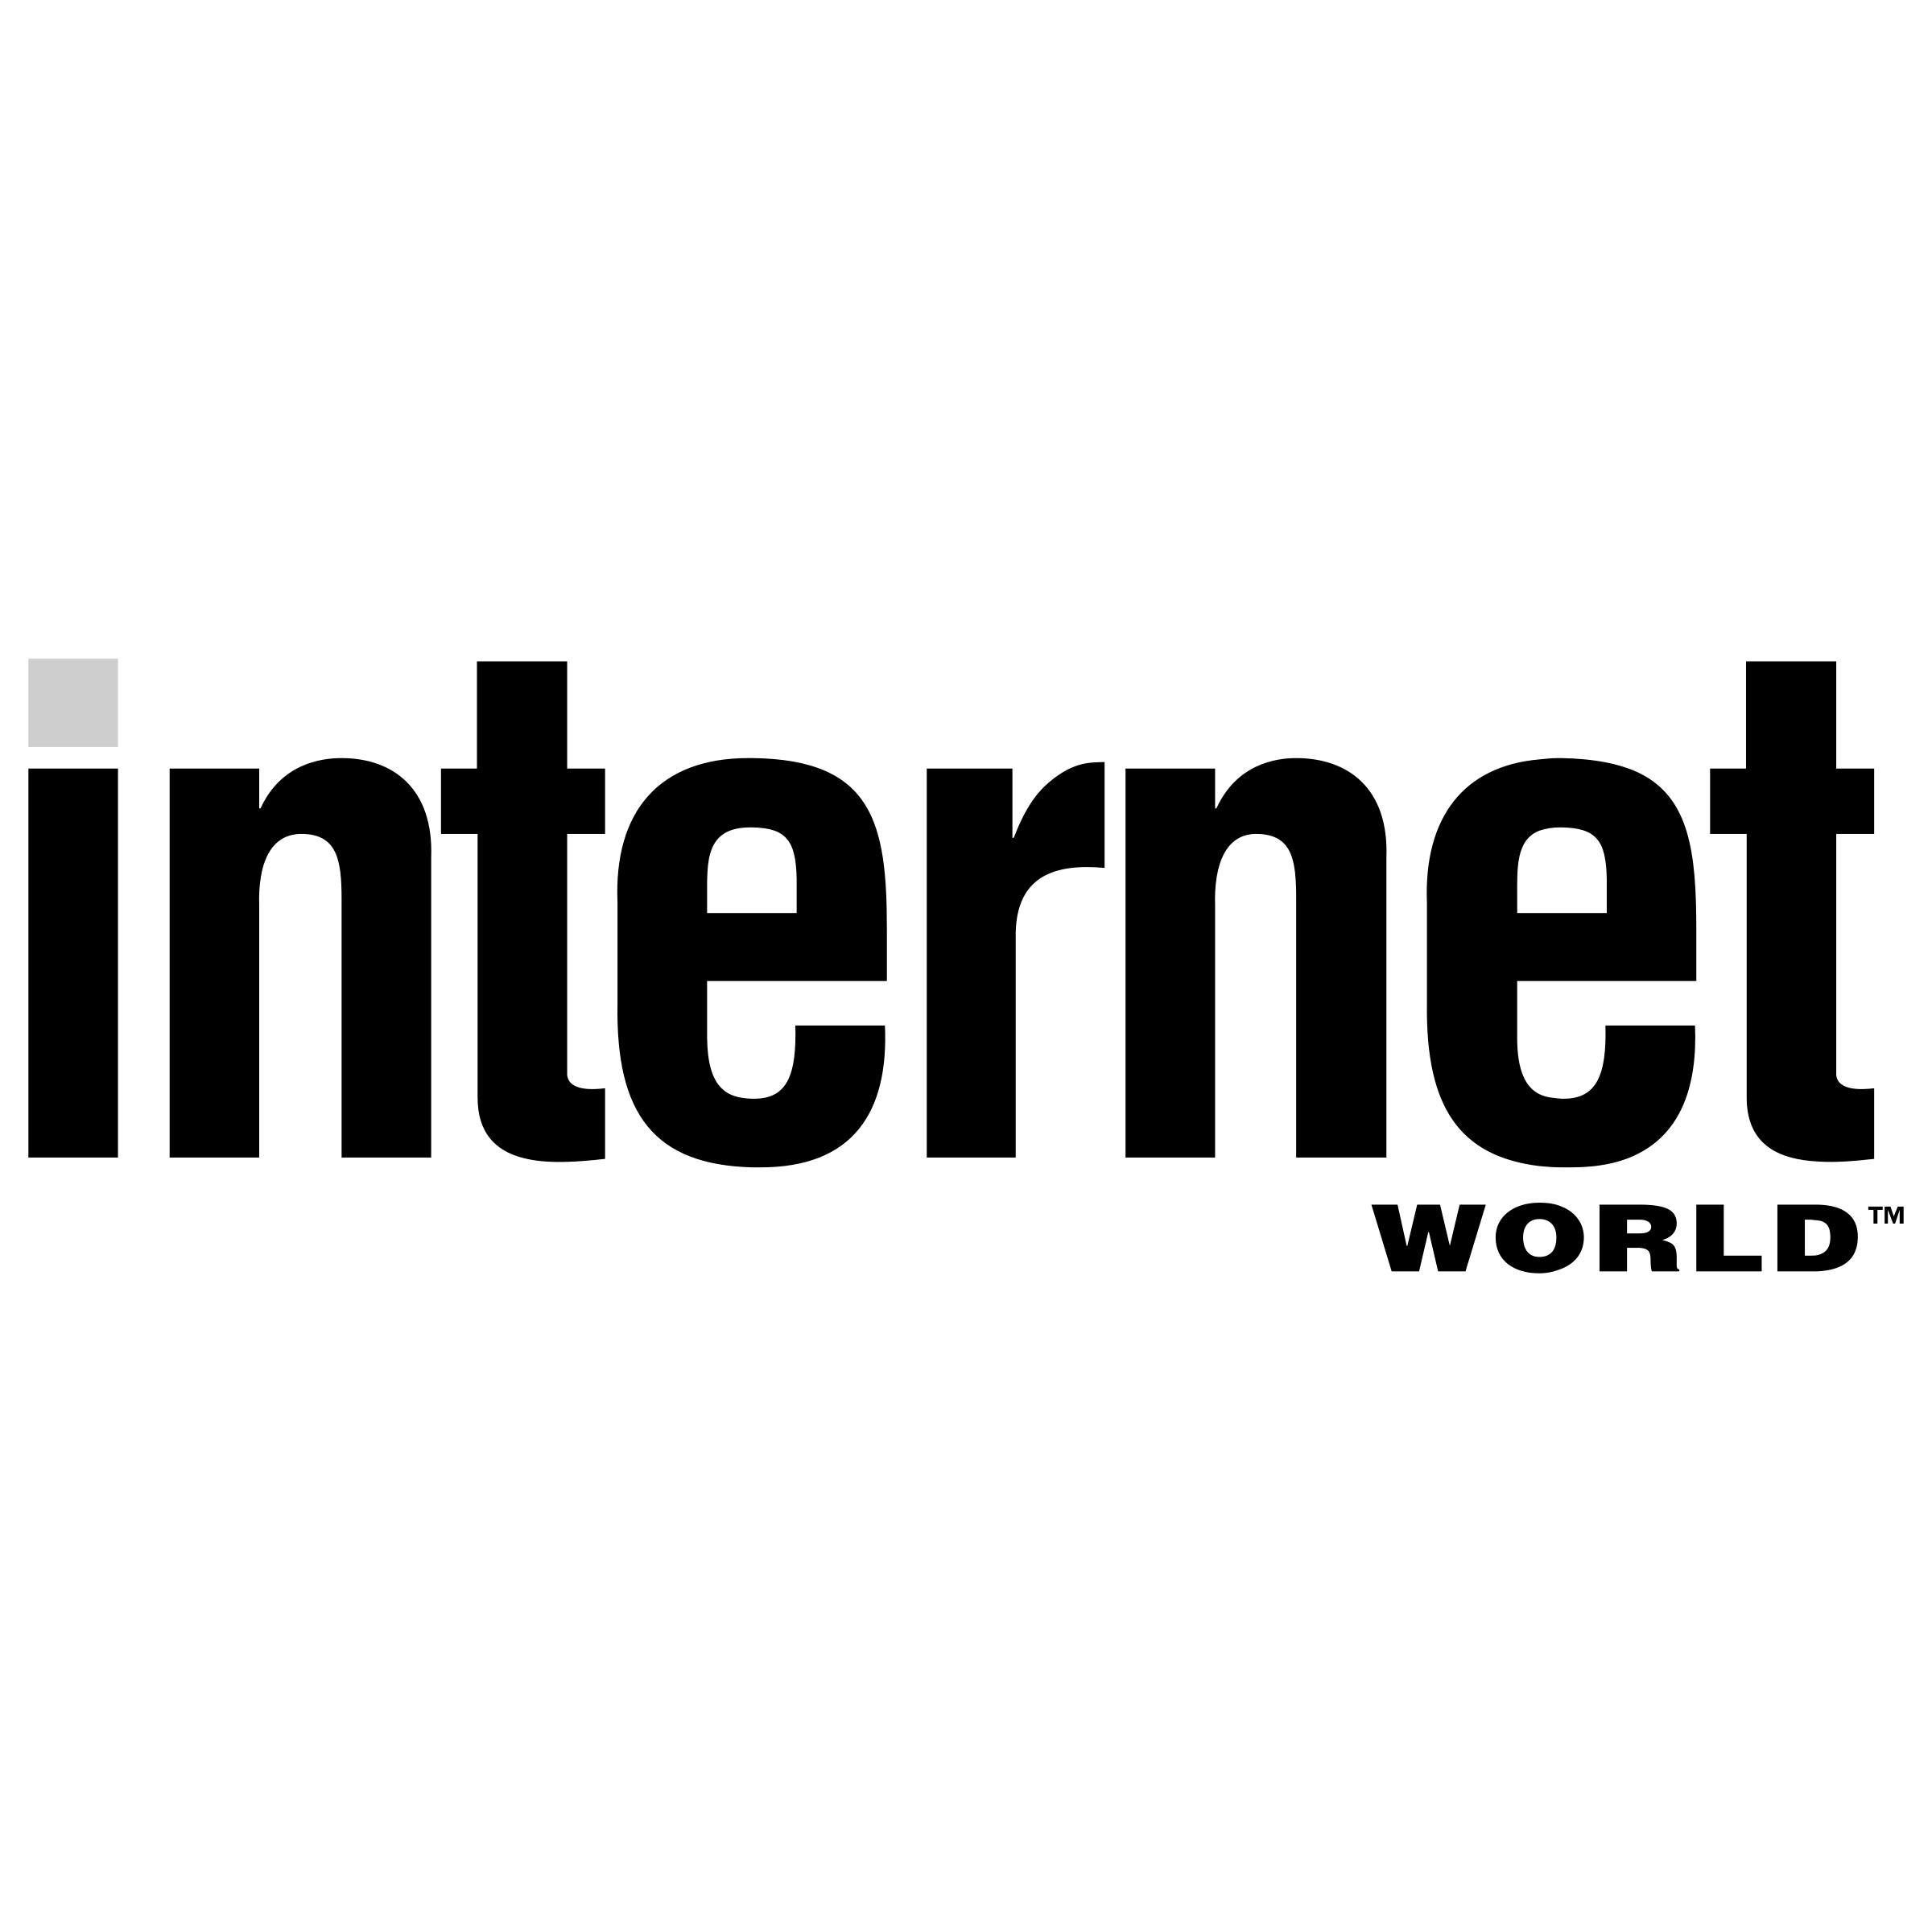 Internet World Logo - Internet World Logo PNG Transparent & SVG Vector - Freebie Supply